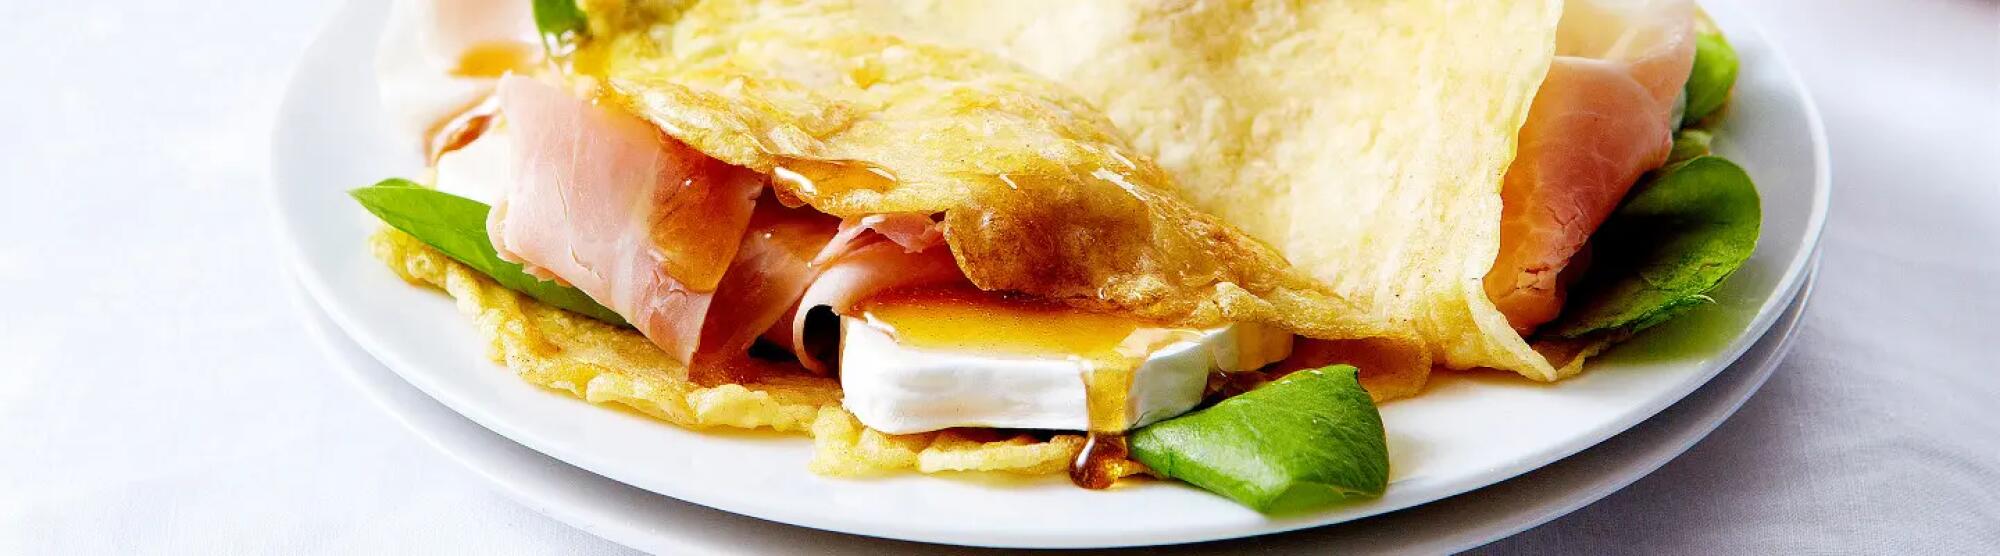 Recette : Omelette au fromage et jambon cru